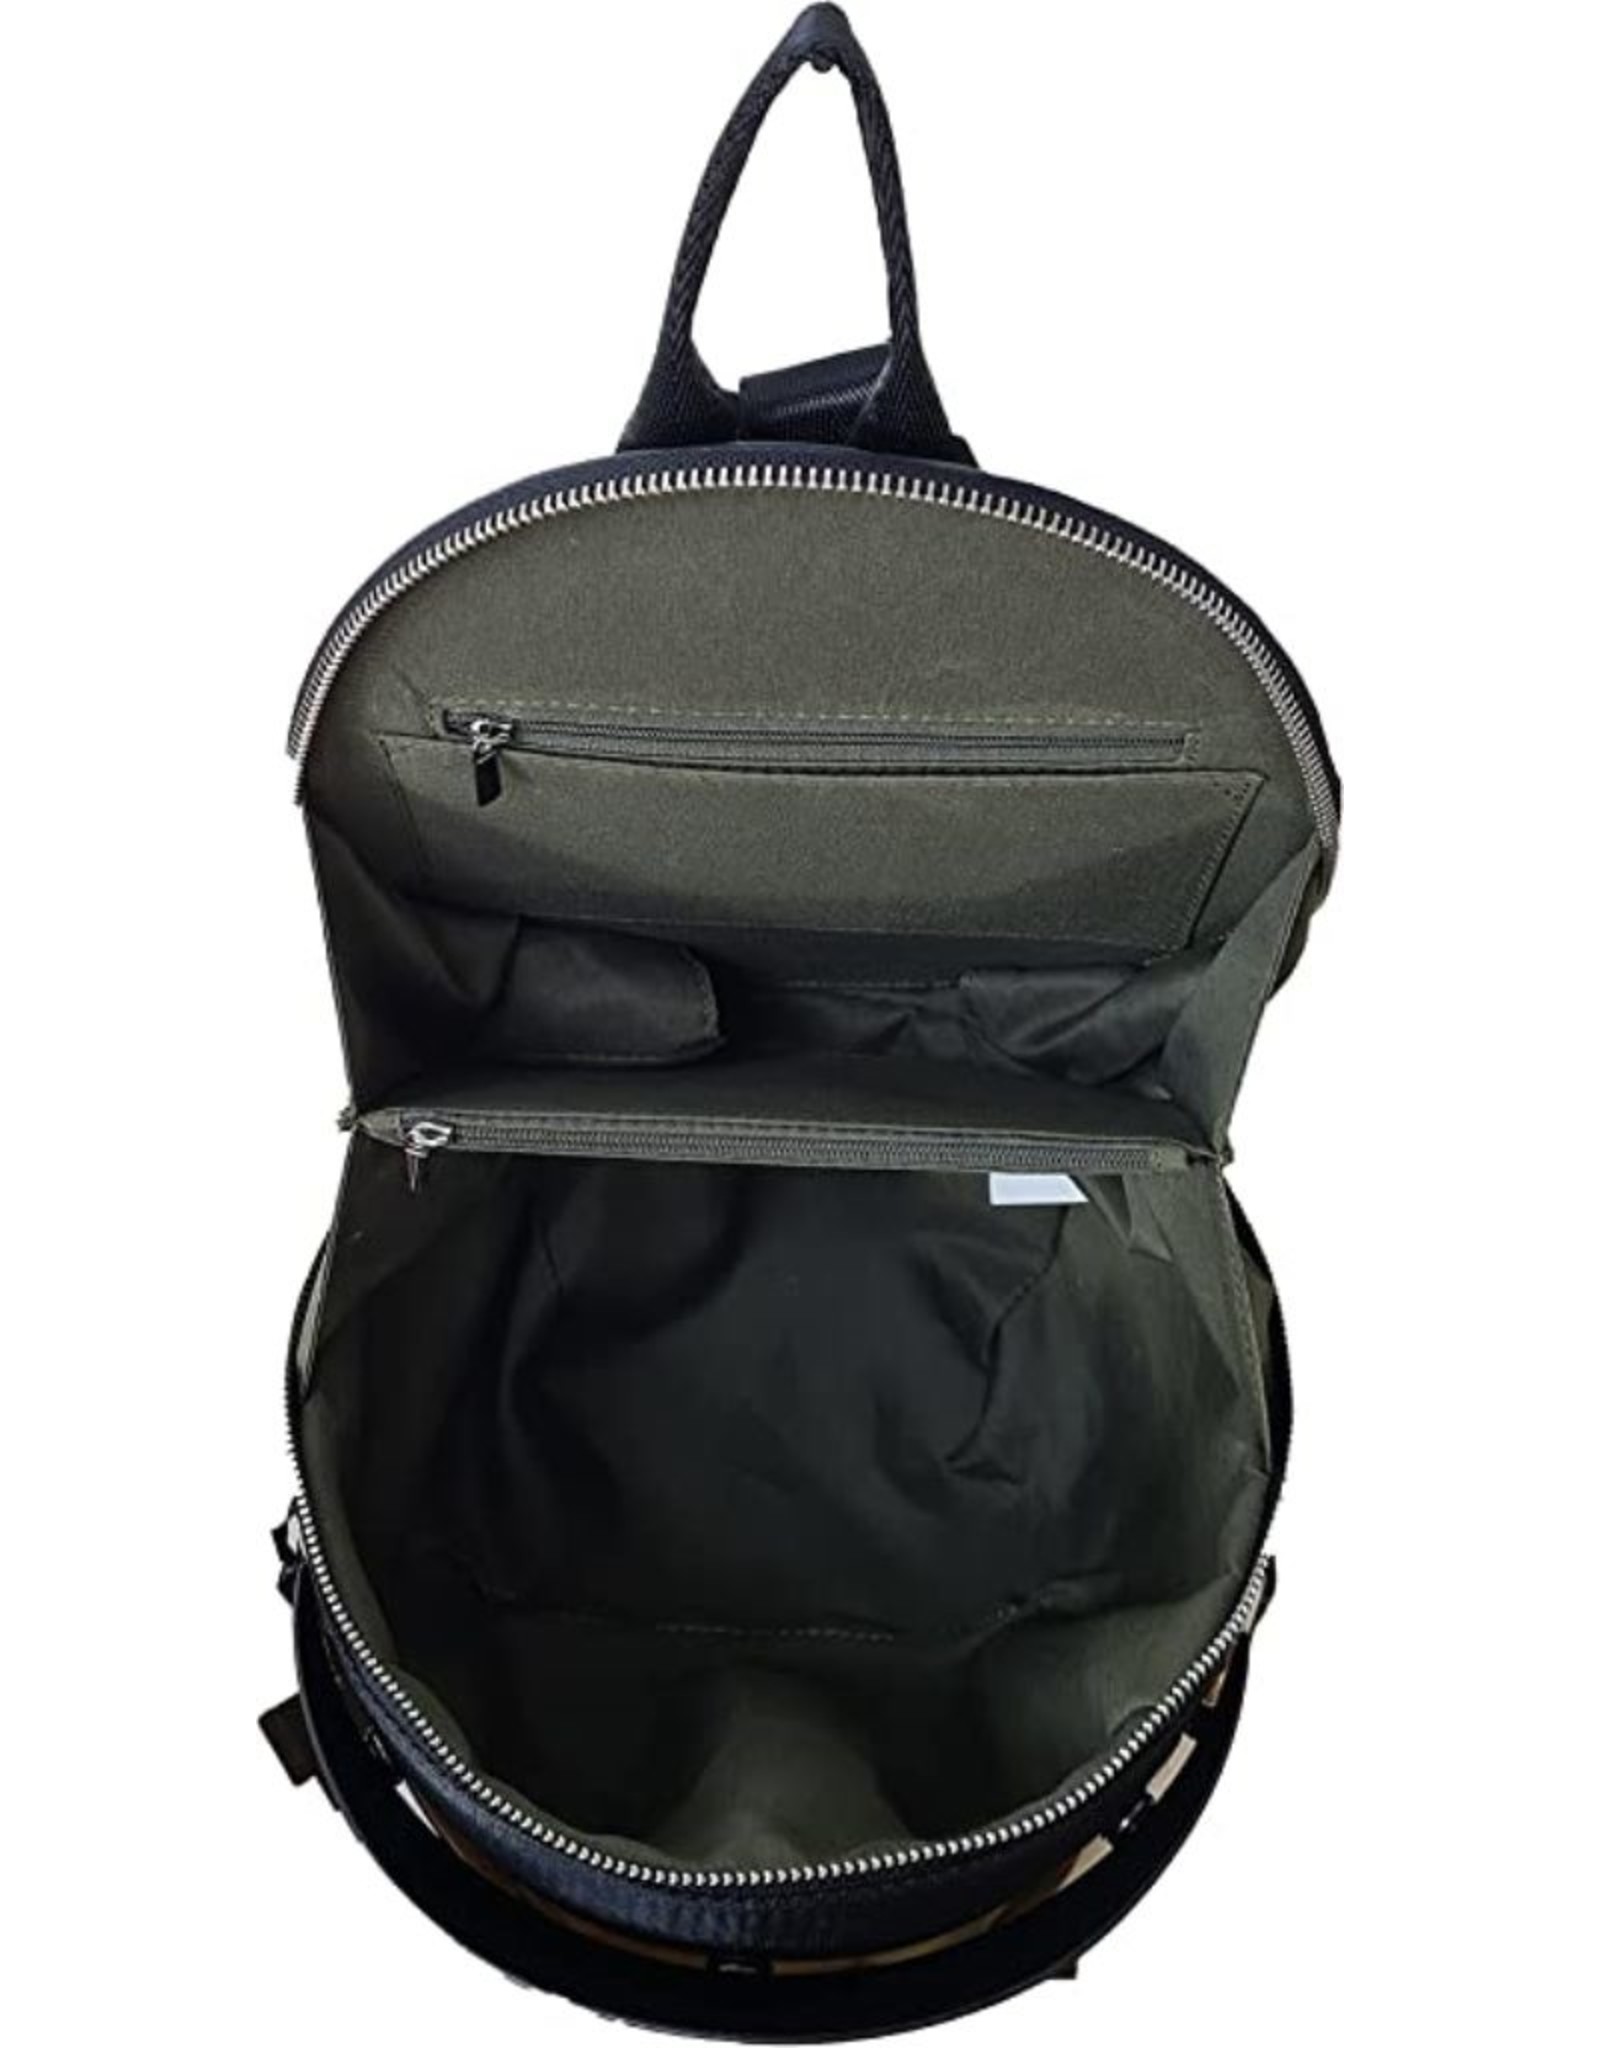 Magic Bags Fantasy bags and wallets - Motorbike helmet backpack-shoulder bag with Italian Flag